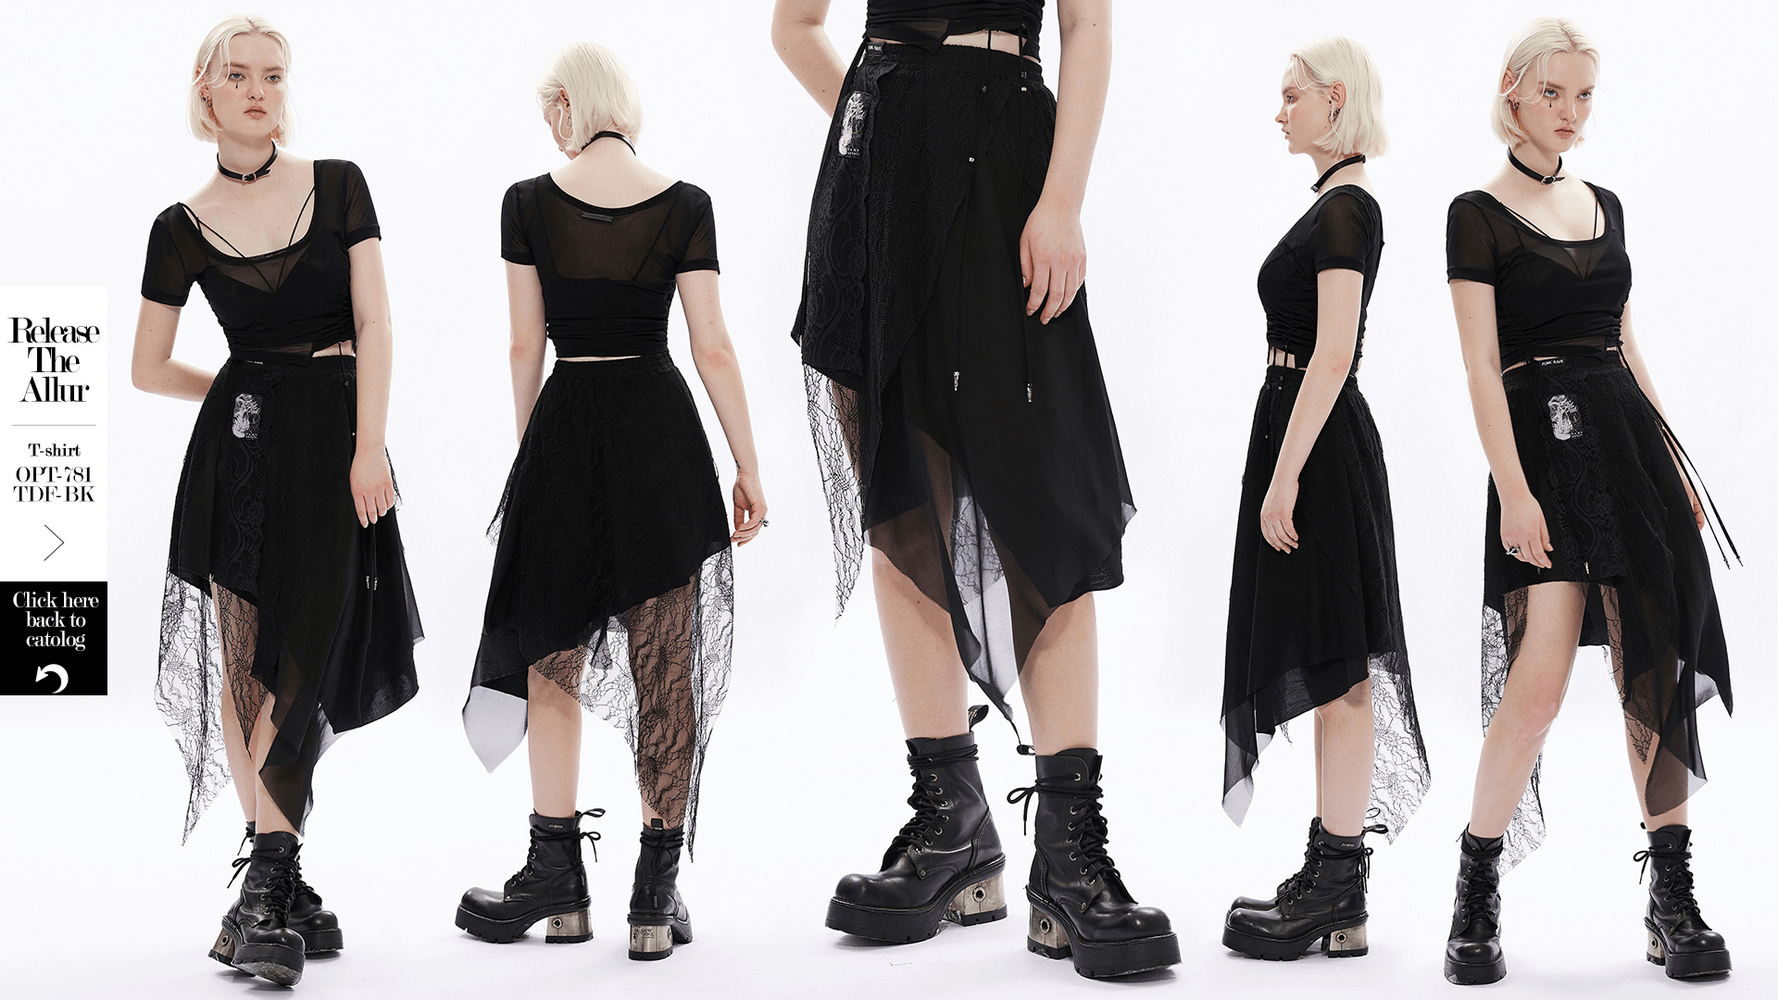 Edgy Black Asymmetric Lace-Trim High-Low Skirt